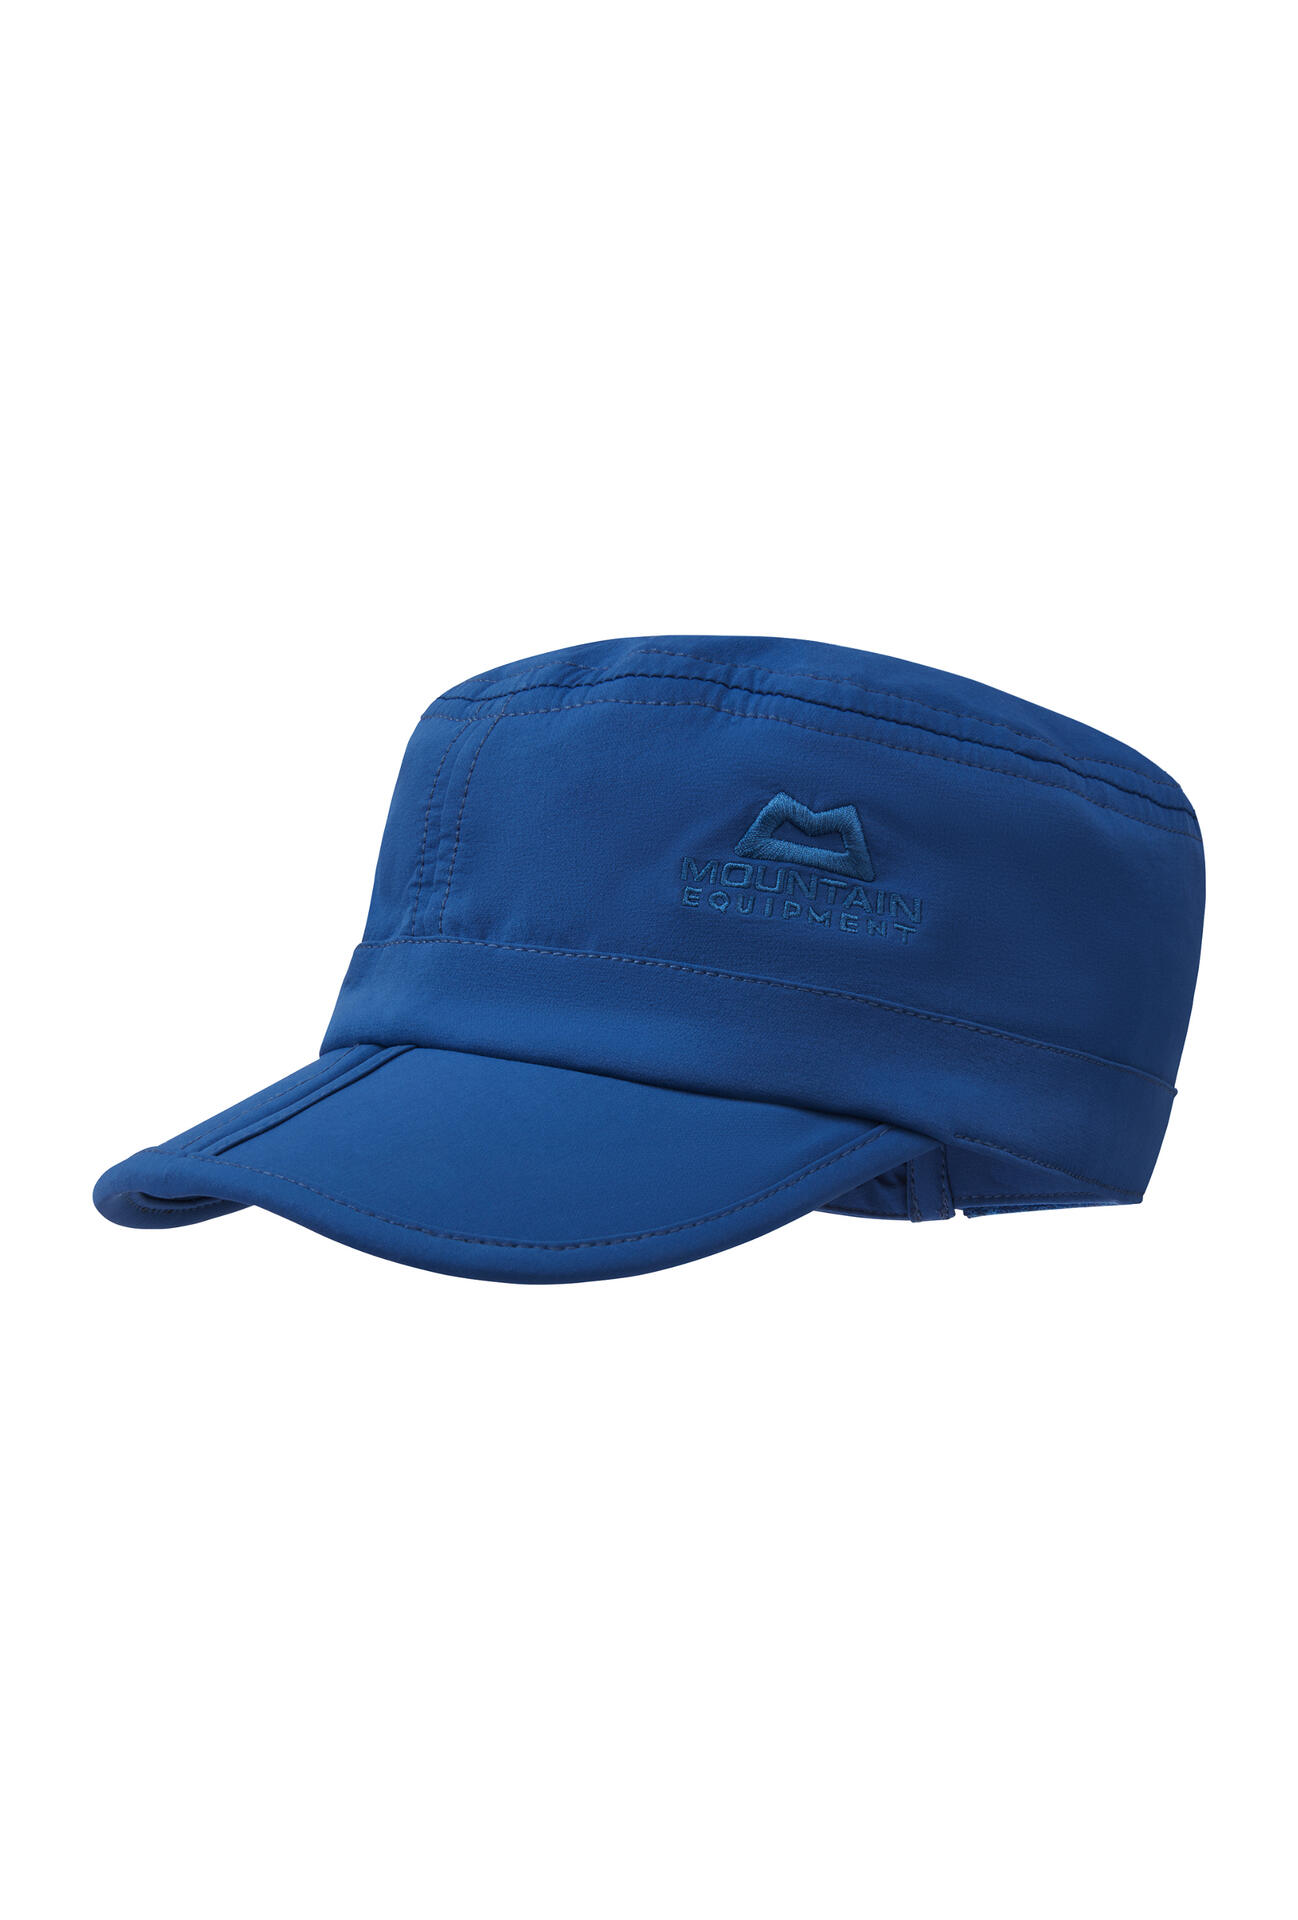 Mountain Equipment Frontier Cap Barva: admiral blue